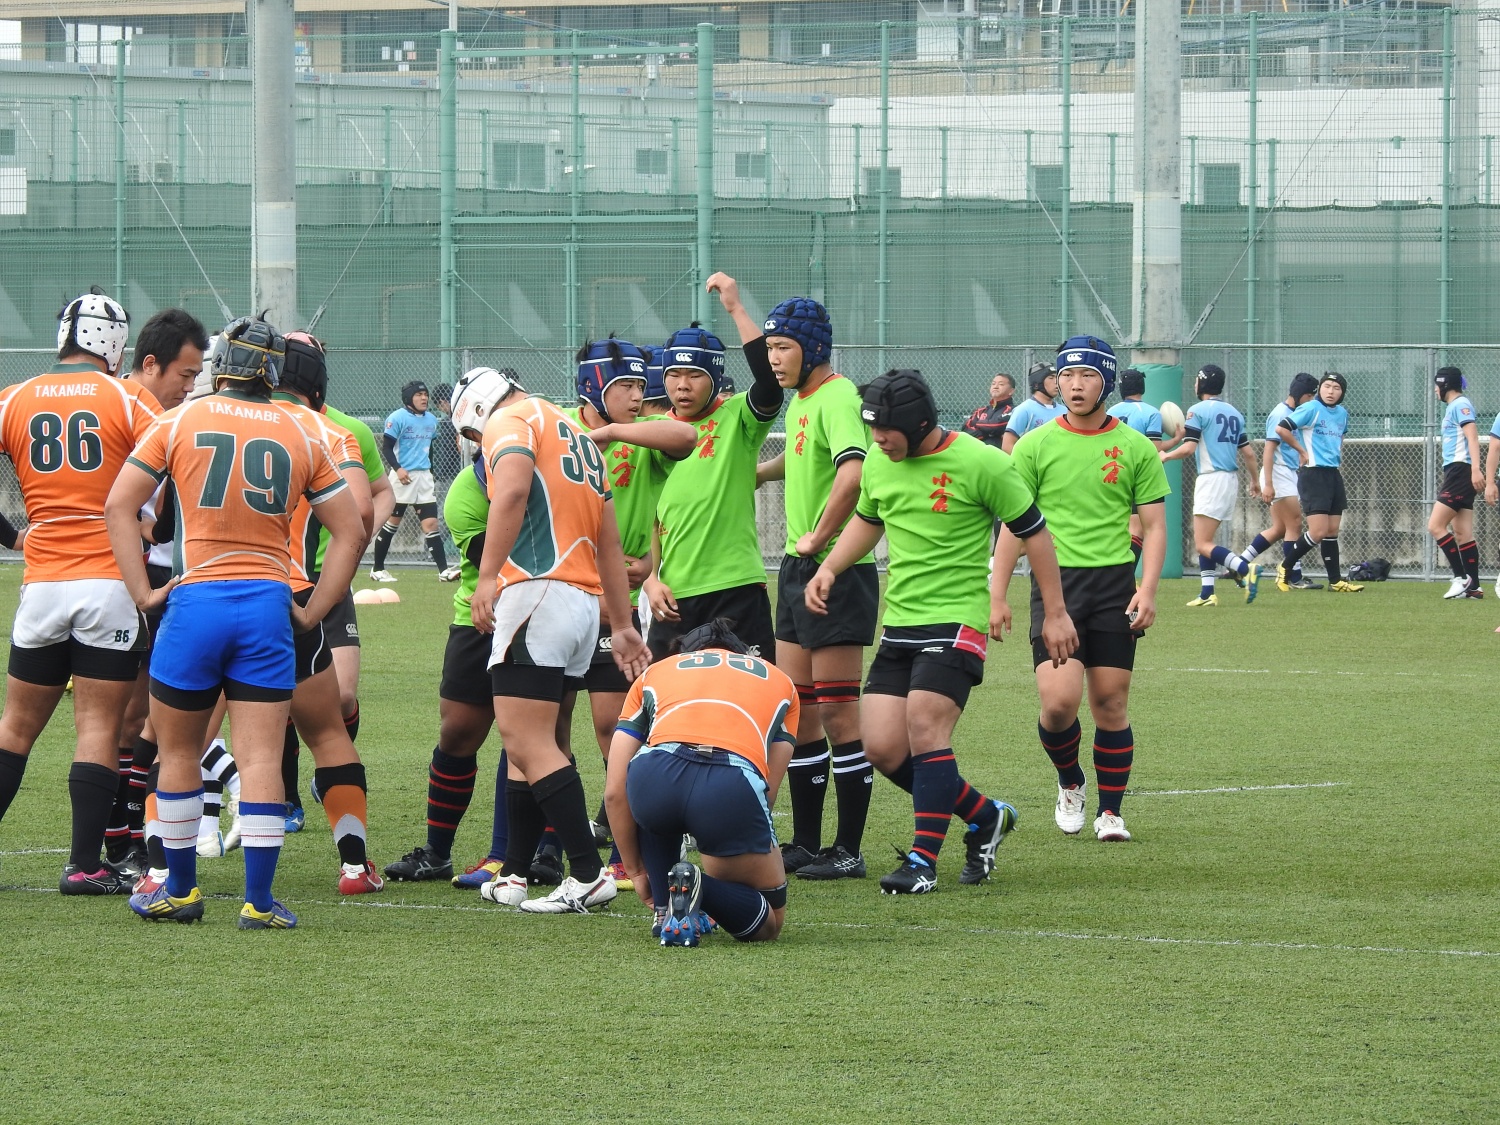 http://kokura-rugby.sakura.ne.jp/90006_xlarge.jpg